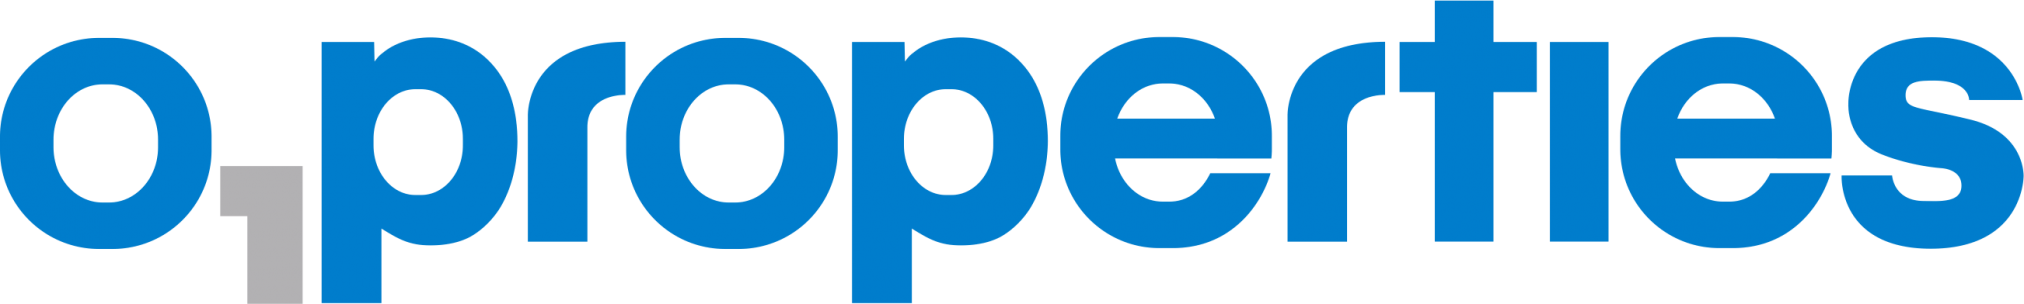 01-properties-logo.png